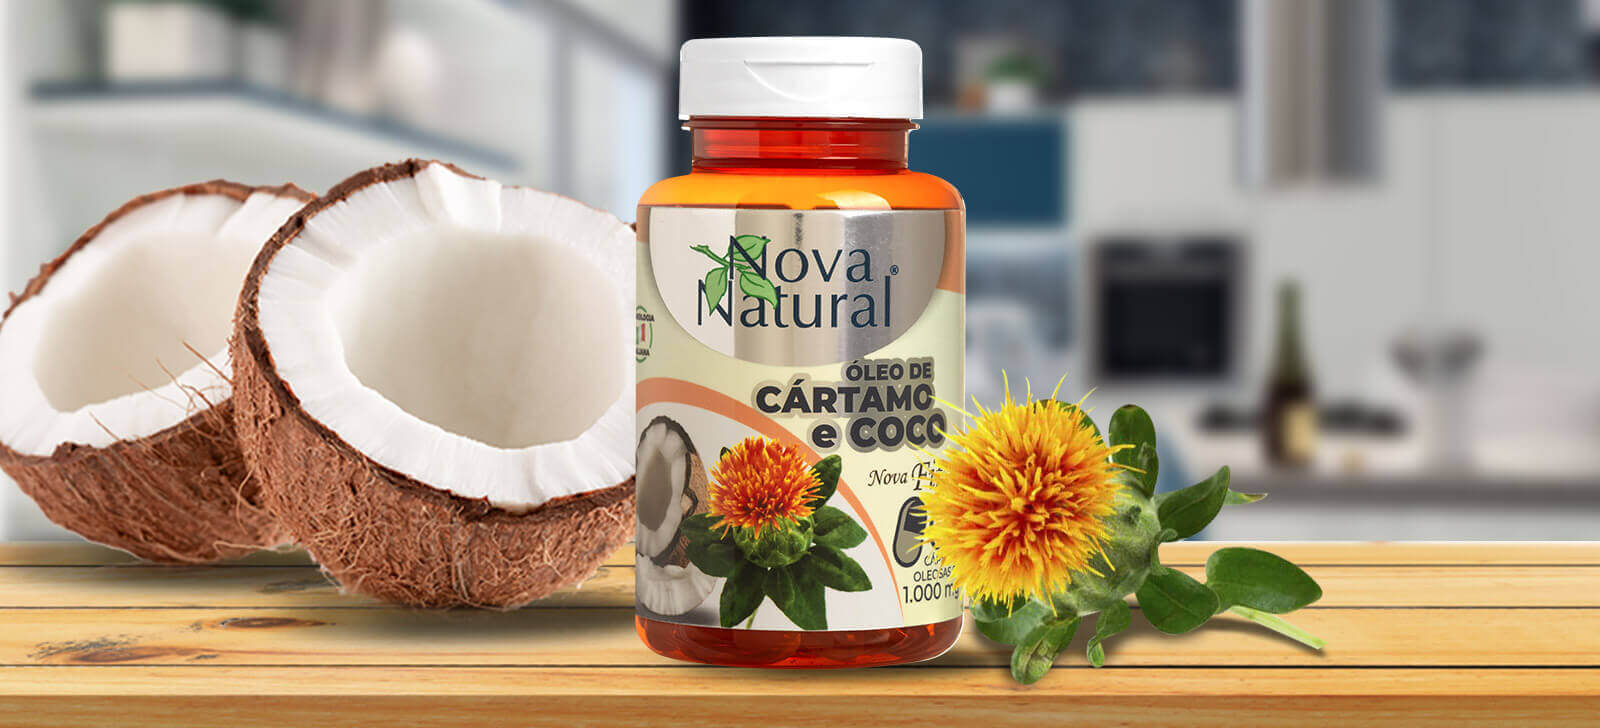 farmacia manipulacao campinas nova natural blog natureza magistral emagrecer entenda fazer perder modelar barriga oleo cartamo coco